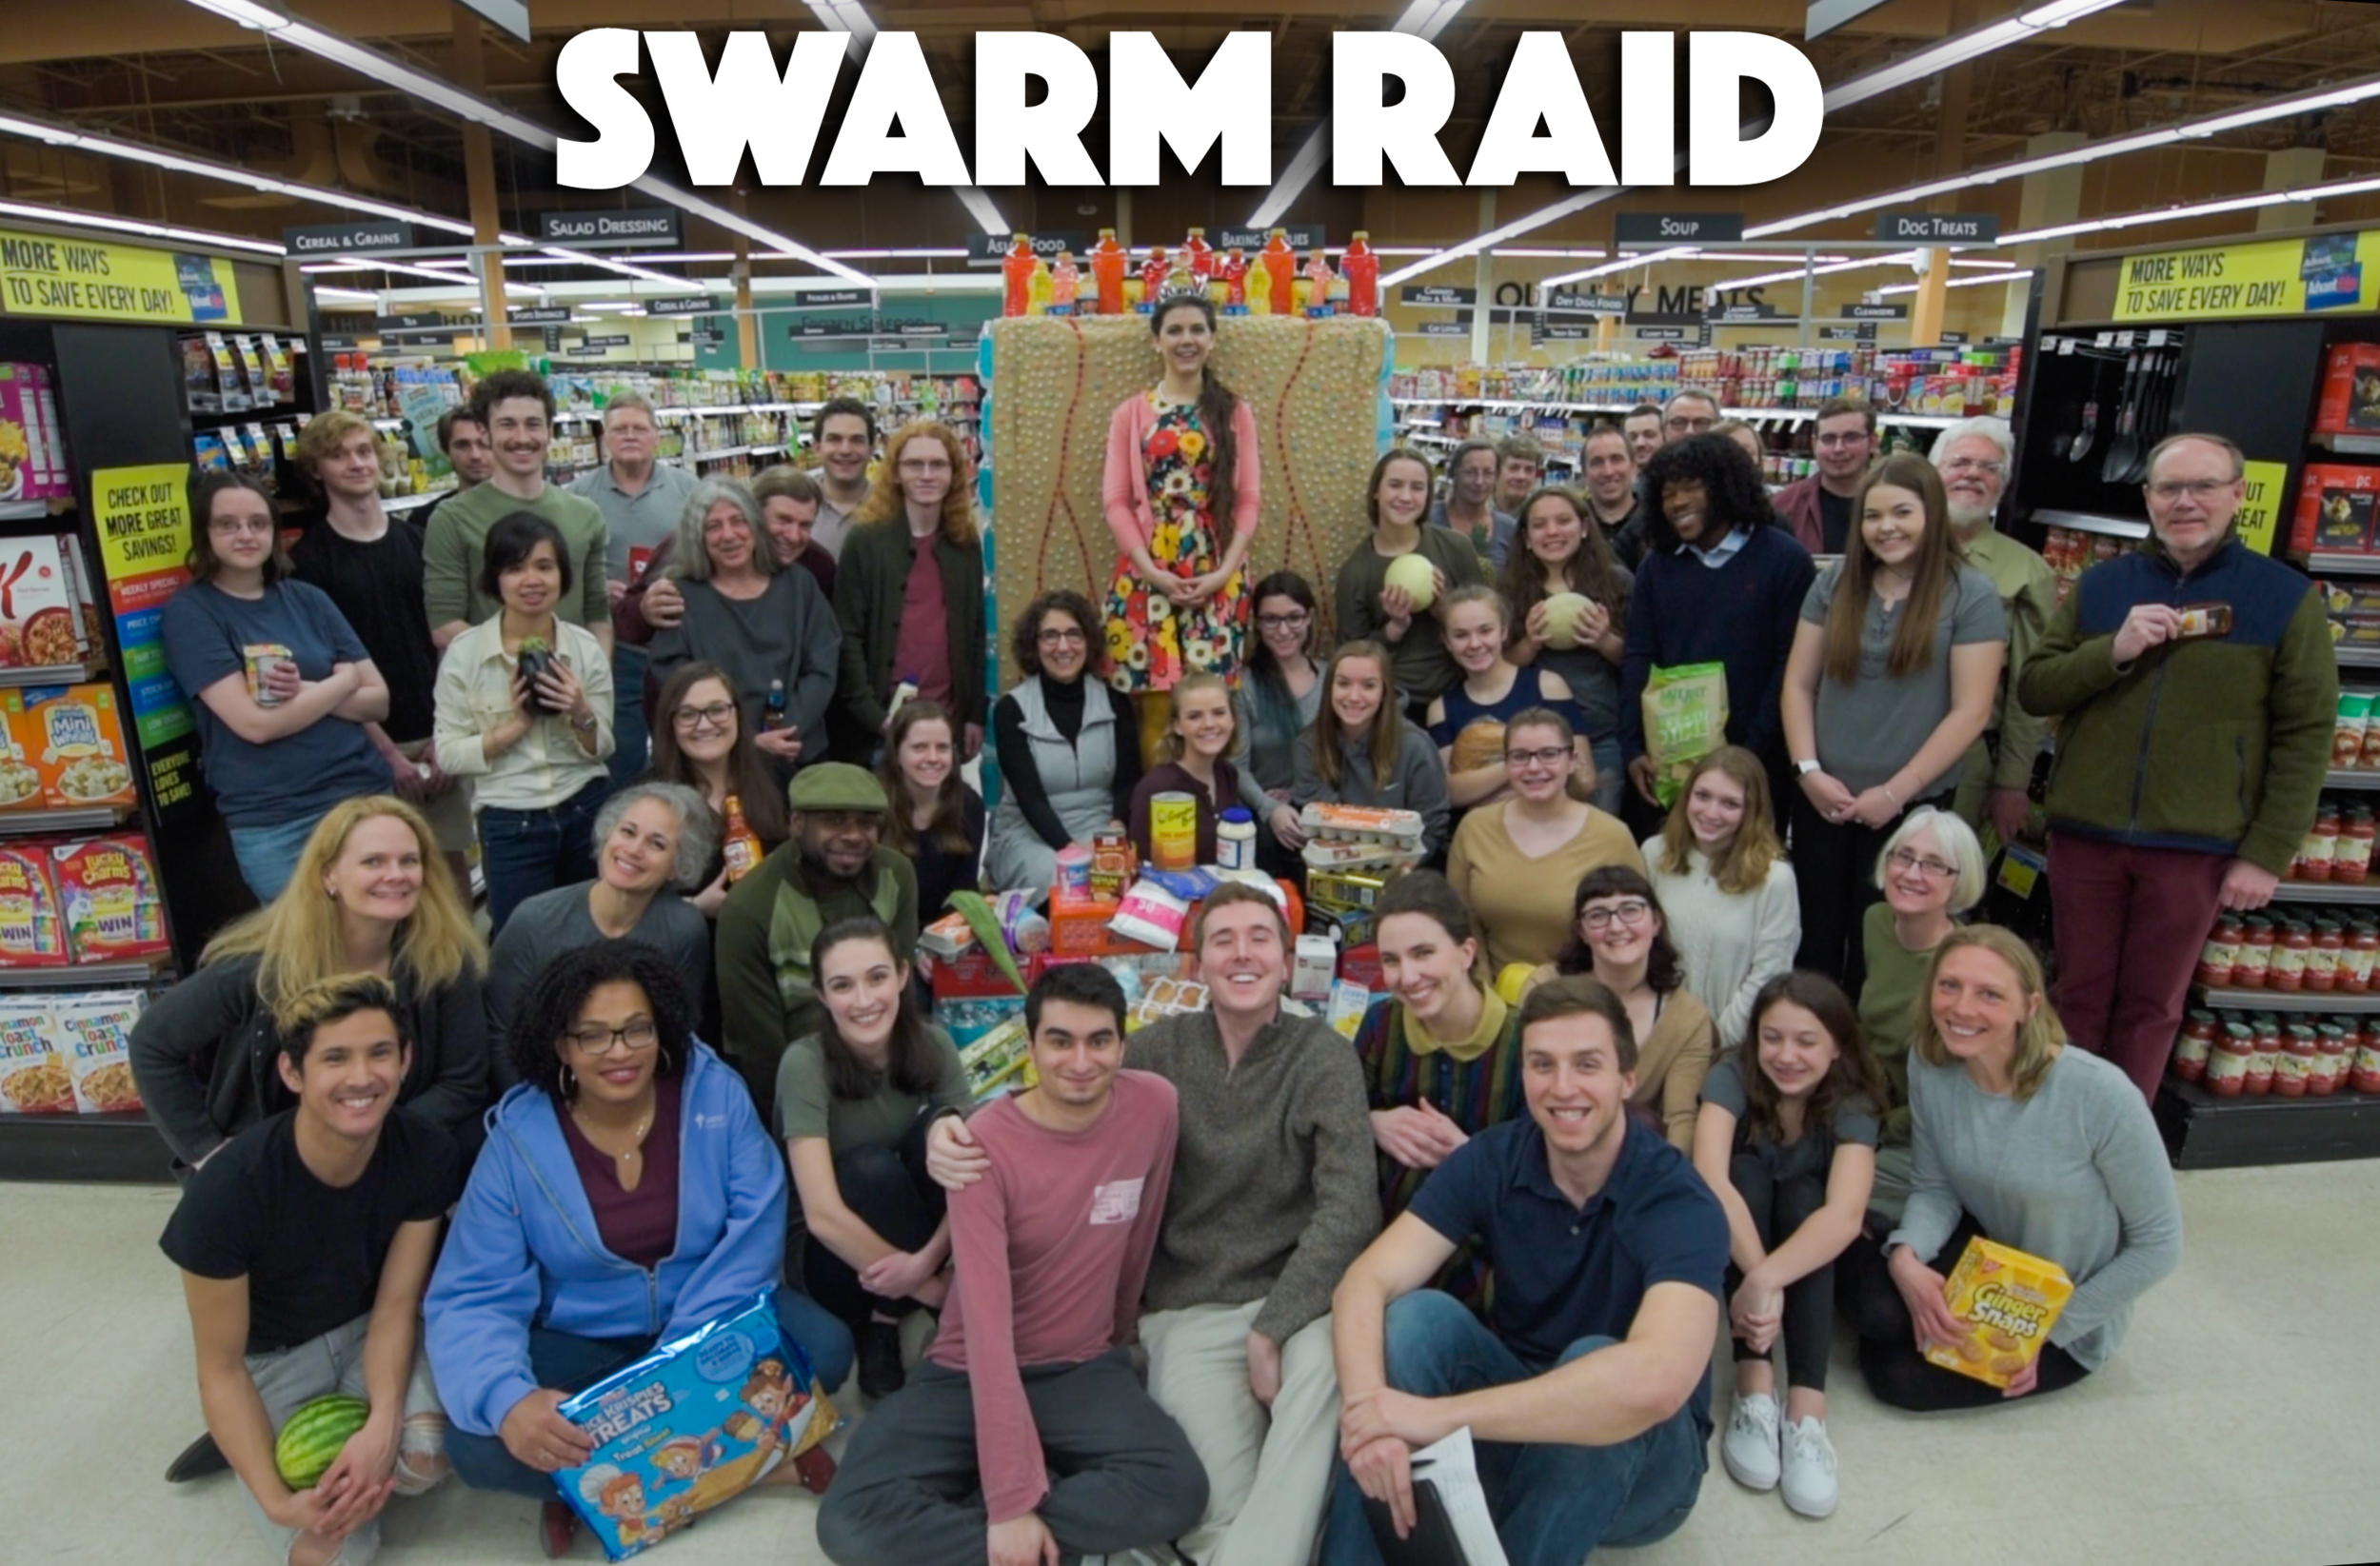 "Swarm Raid" cast and crew